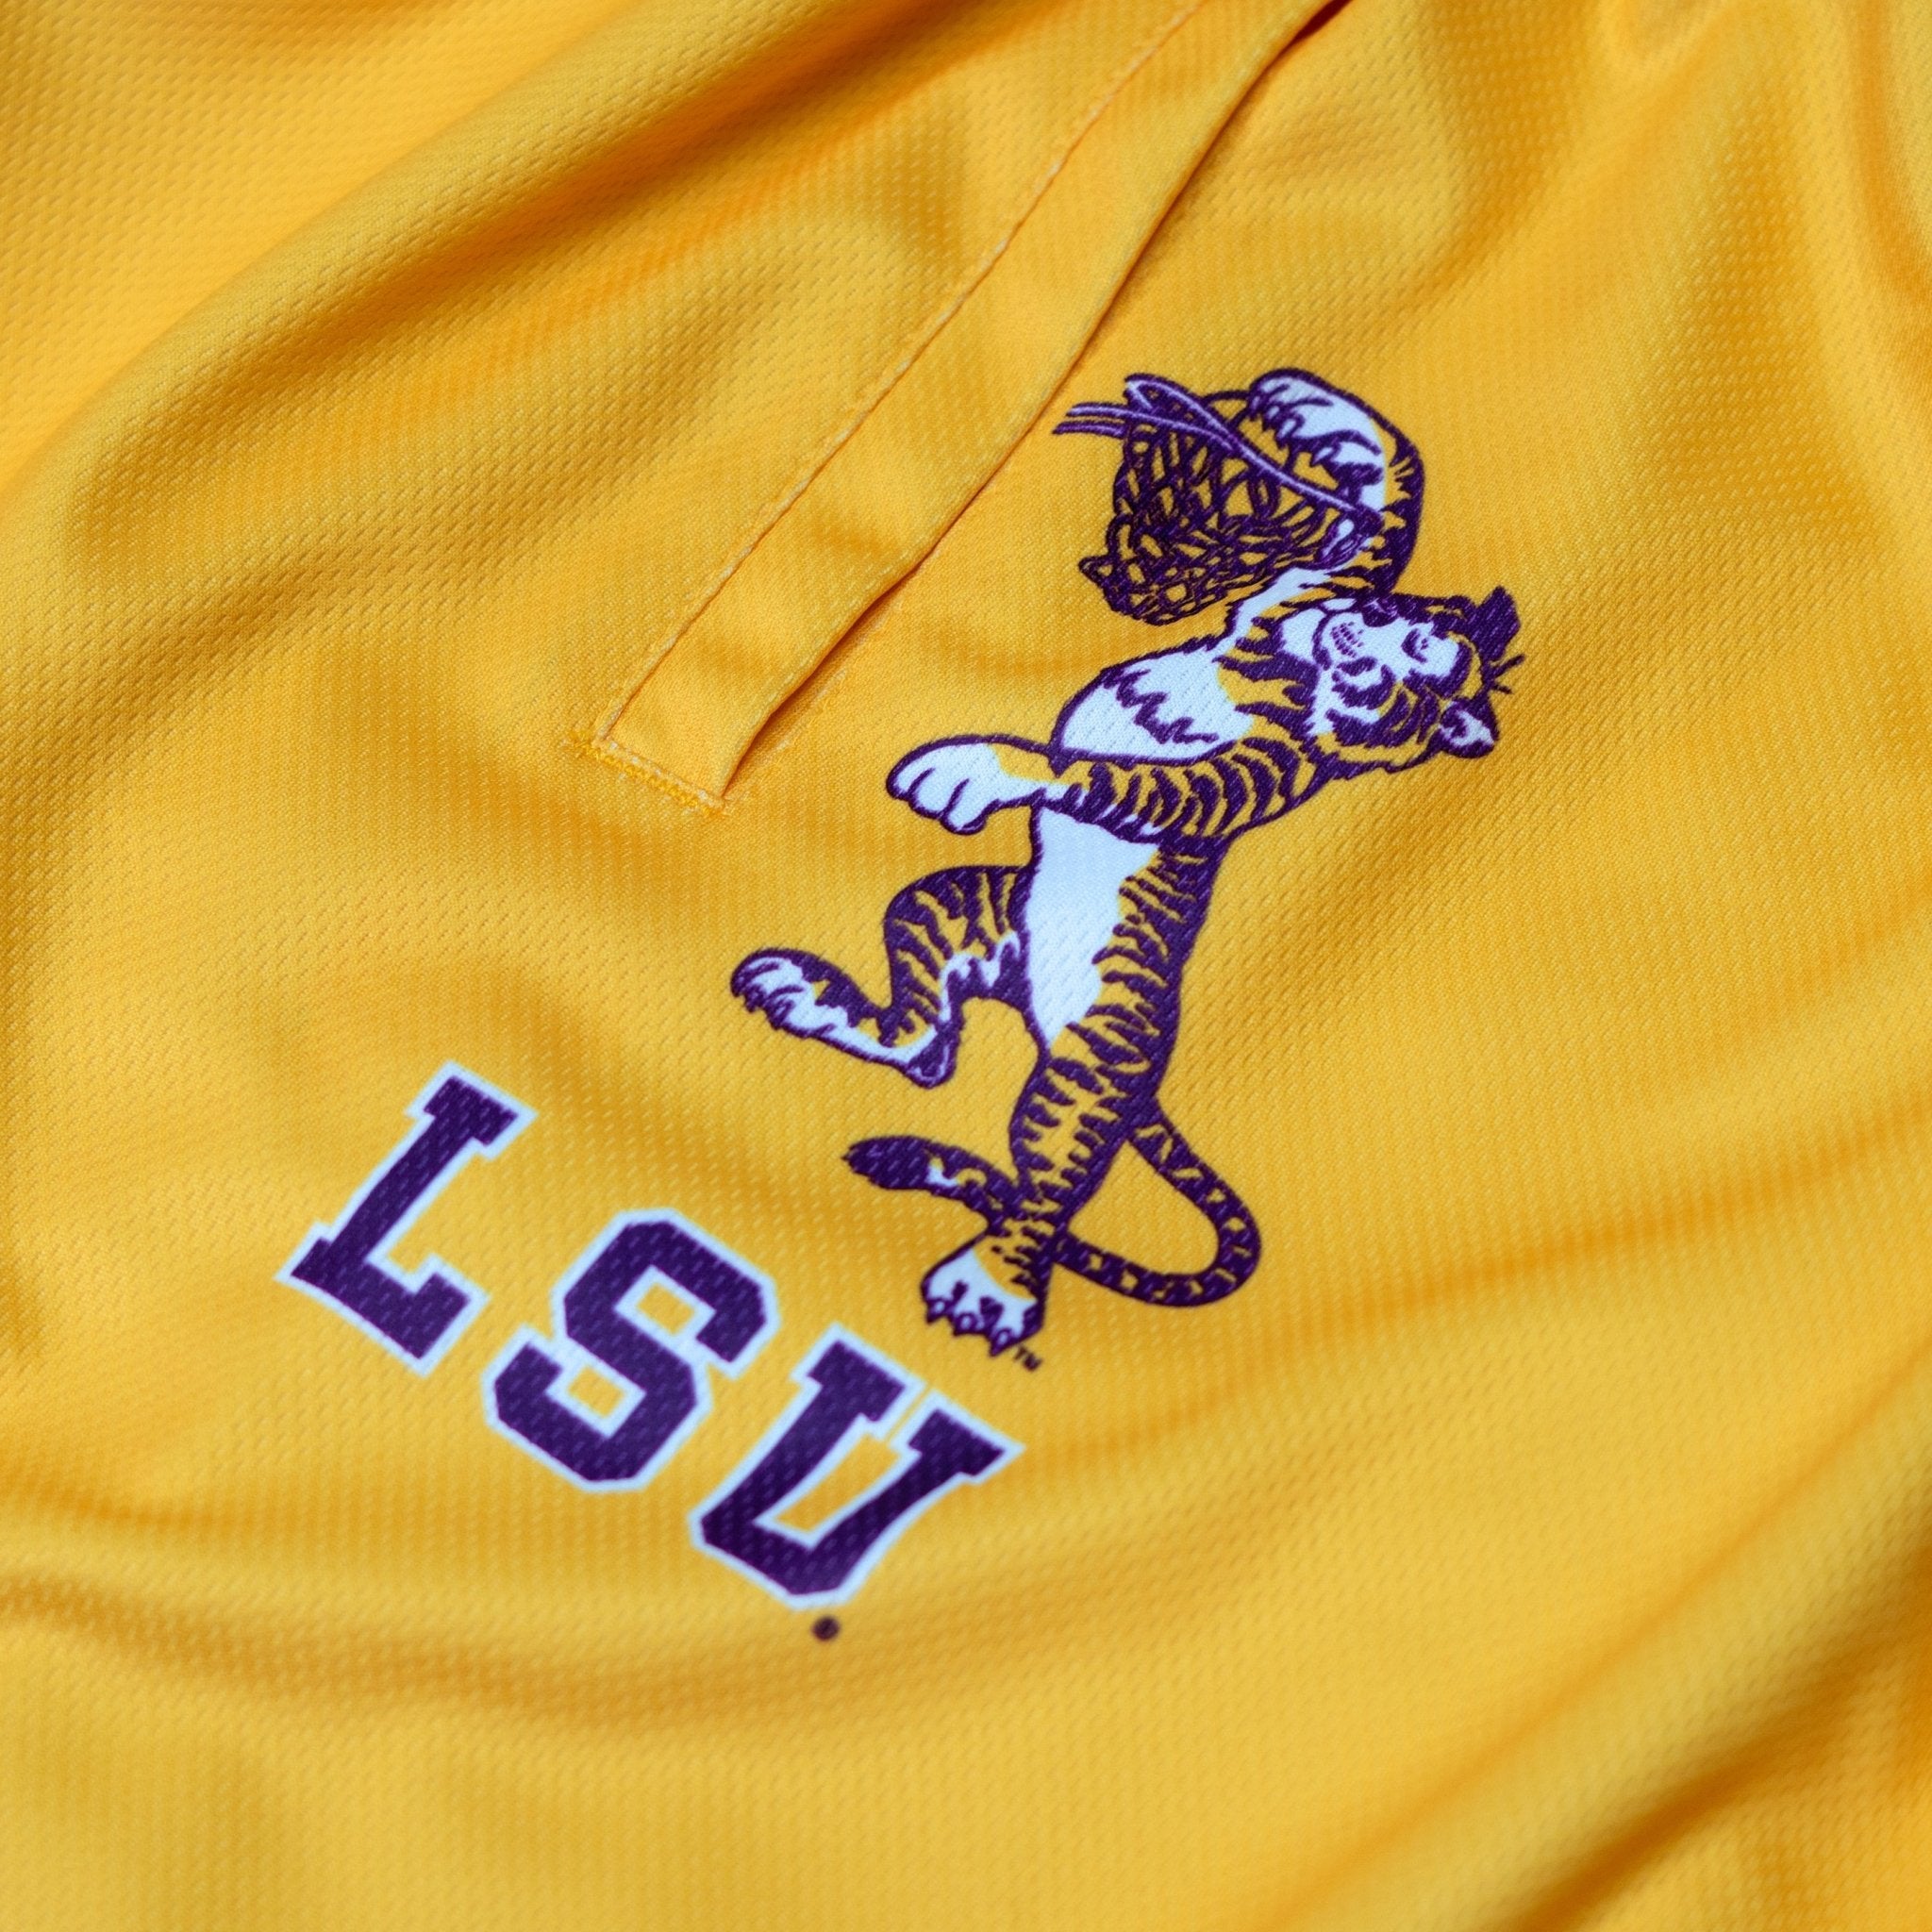 LSU Tigers 1991-1992 Retro Shorts - SLAM